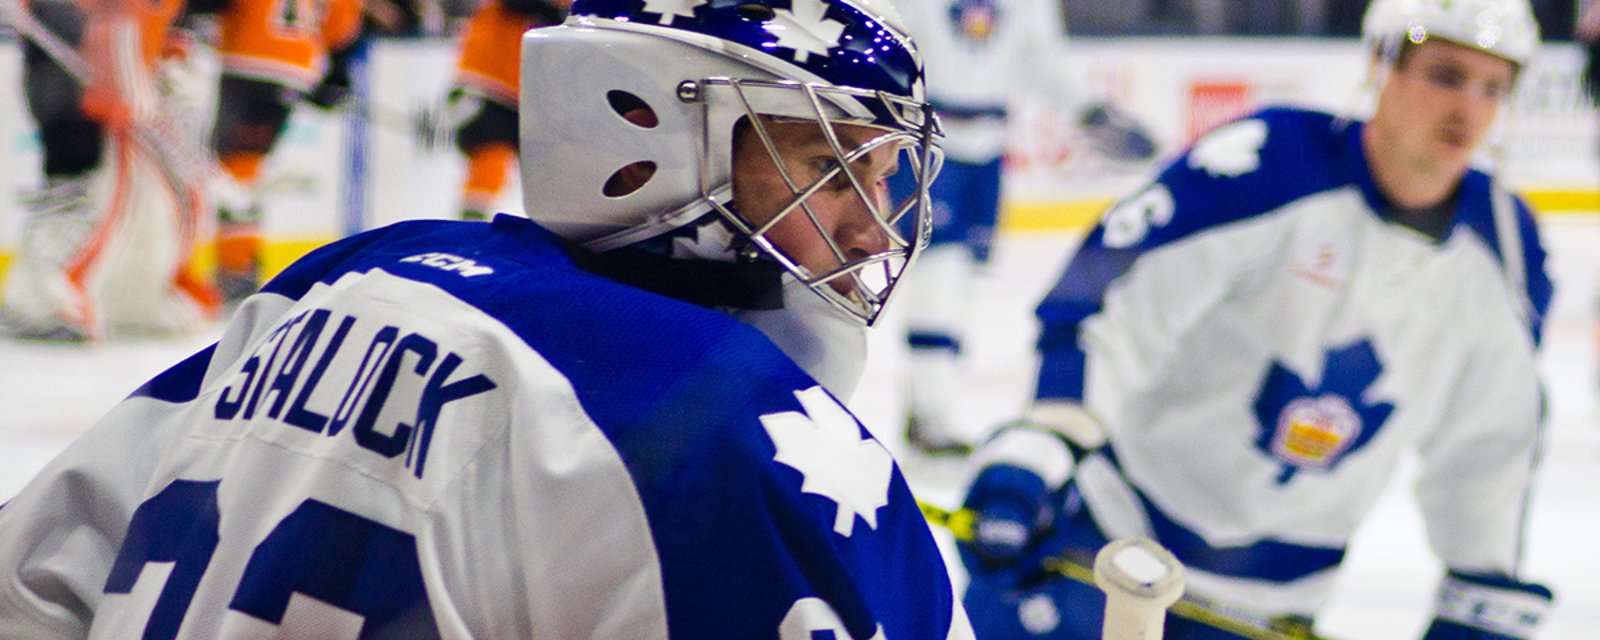 Wild backup Stalock recalls “weird” stint with Leafs